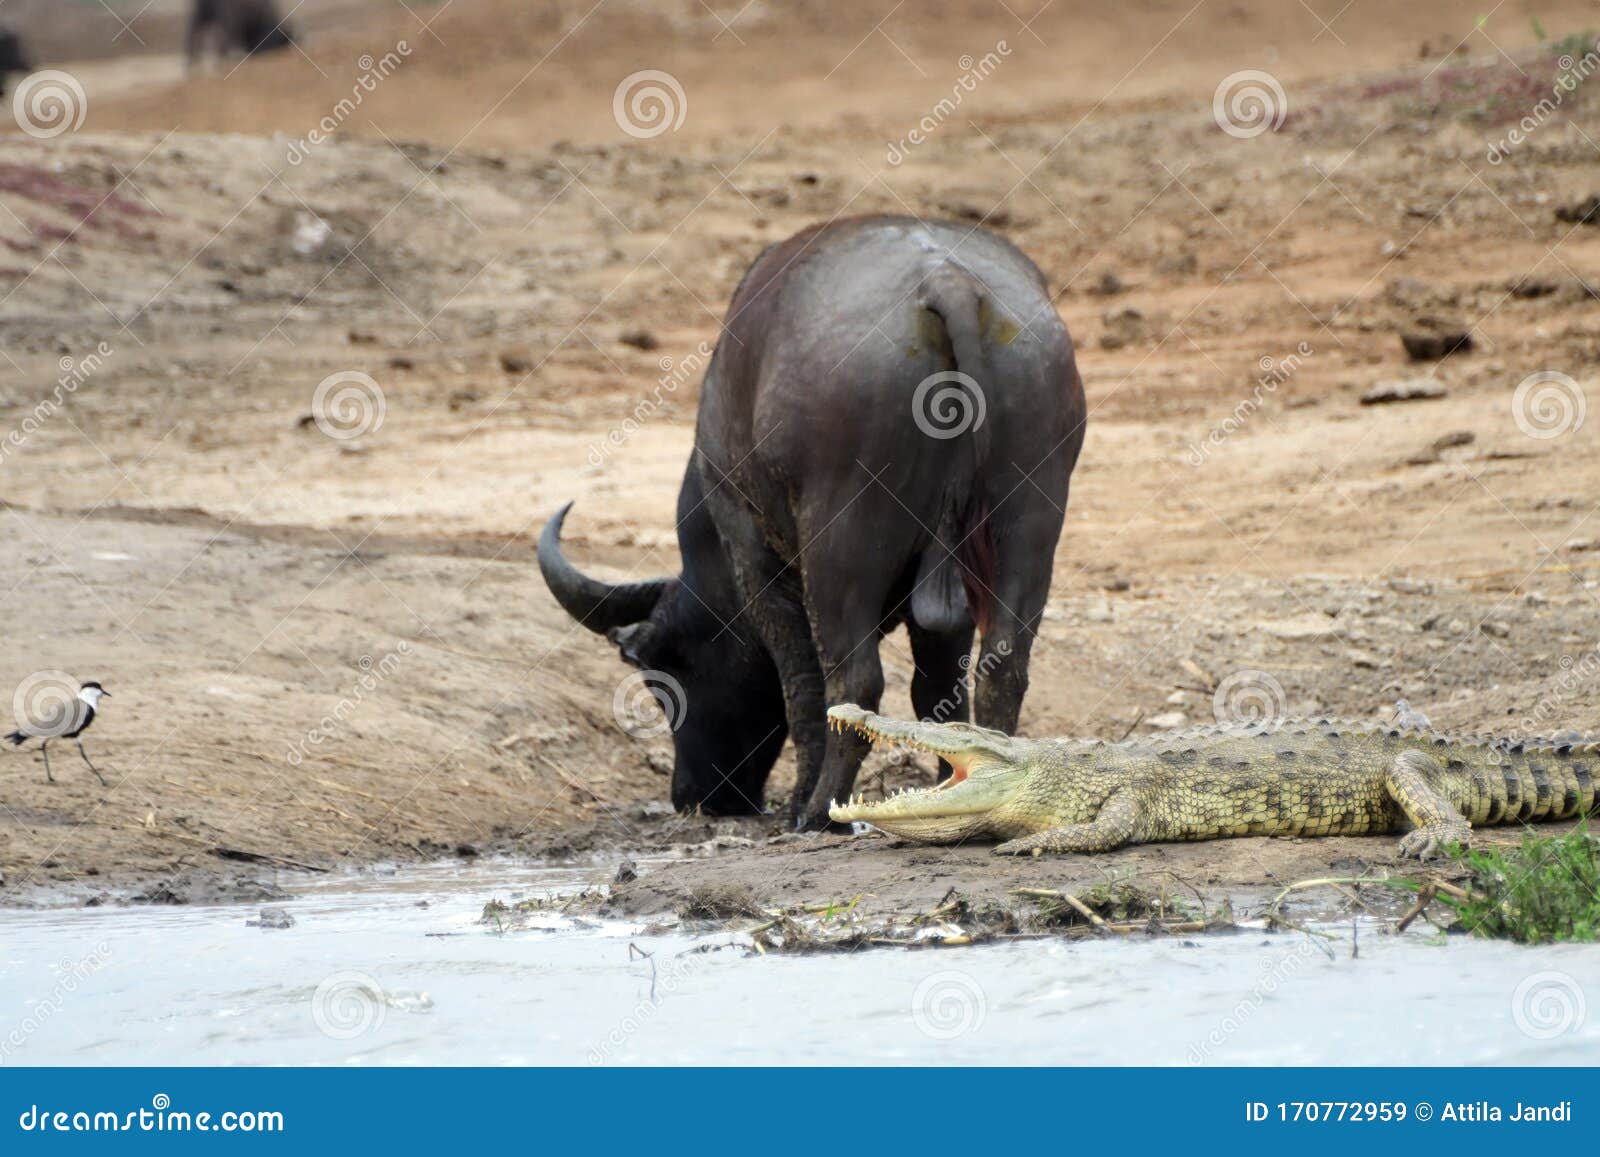 krave Forretningsmand morder Cape Buffalo and a Nile Crocodile, Queen Elizabeth National Park, Uganda  Stock Image - Image of elizabethnational, buffalos: 170772959